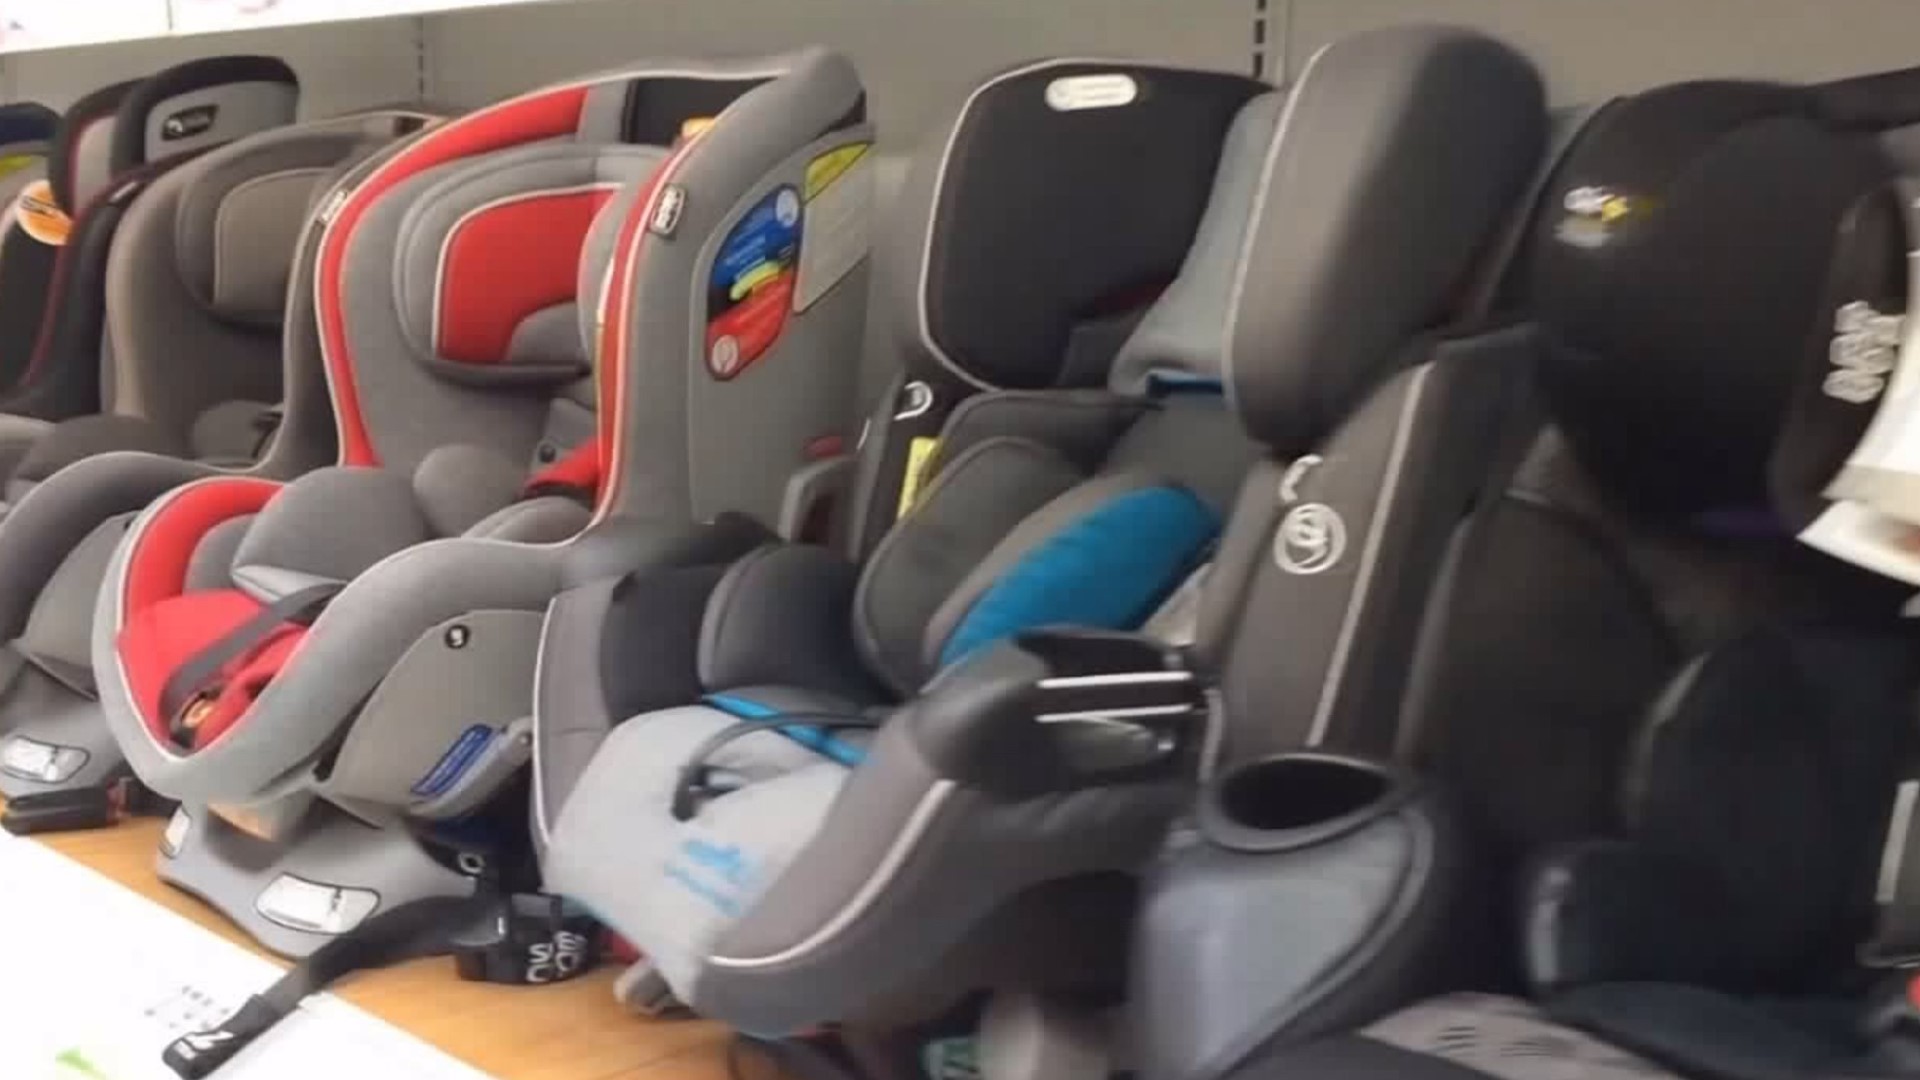 Target`s car seat trade-in program is underway